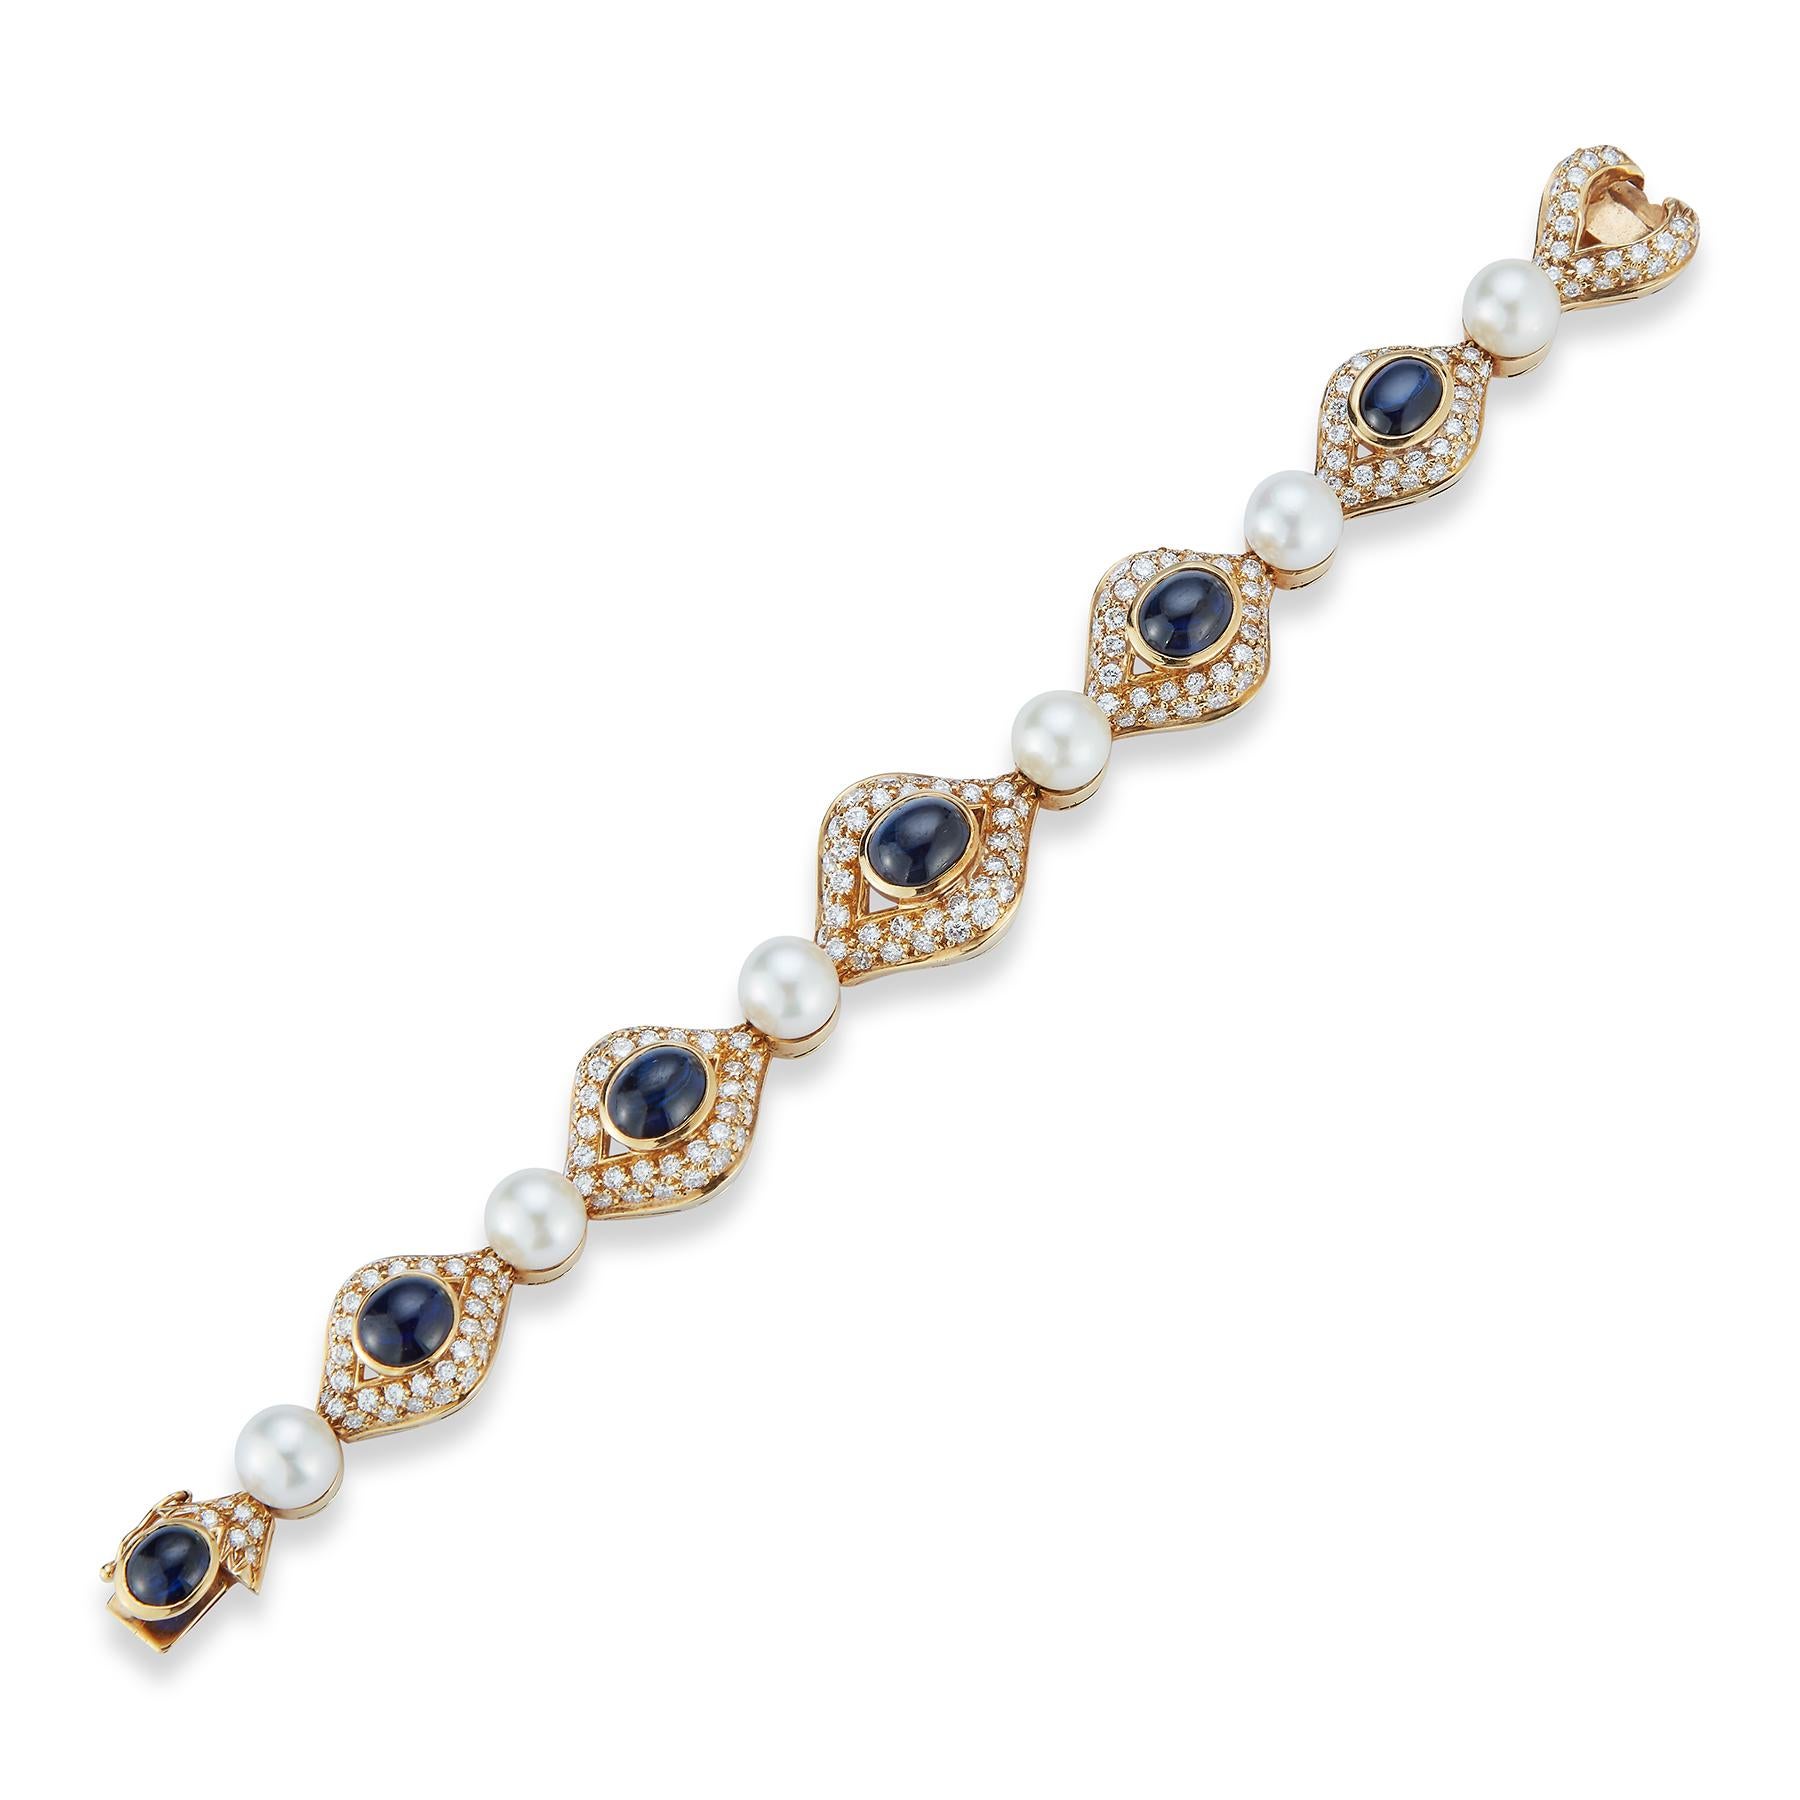 Pearl, Sapphire & Diamond Bracelet, 6 cabochon sapphires, 6 cultured pearls & pave diamonds set in 18K Yellow Gold 
Measurements: 7.5